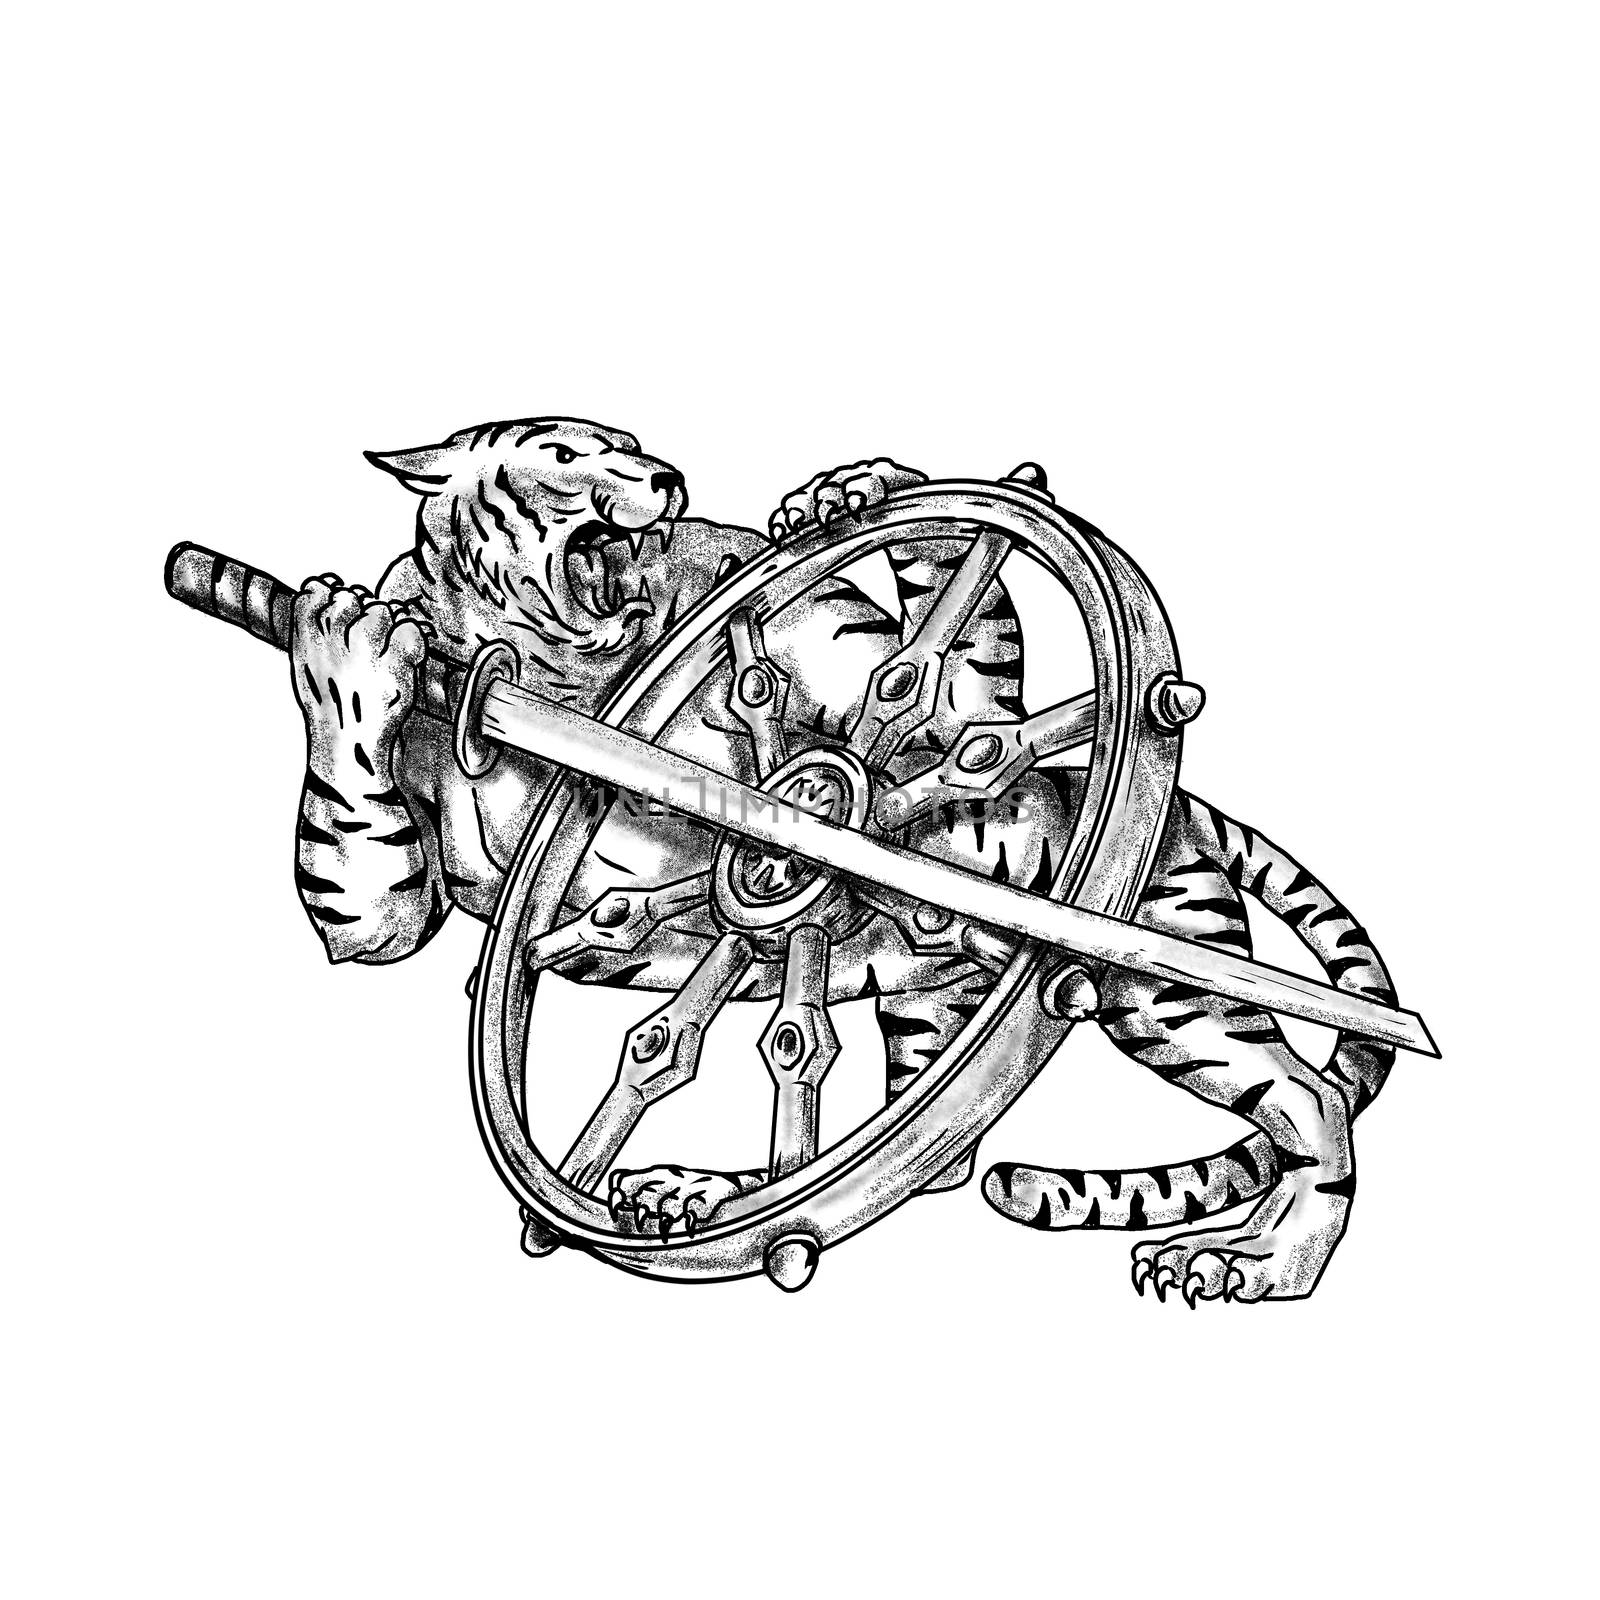 Tiger With Katana and Dharma Wheel Tattoo by patrimonio